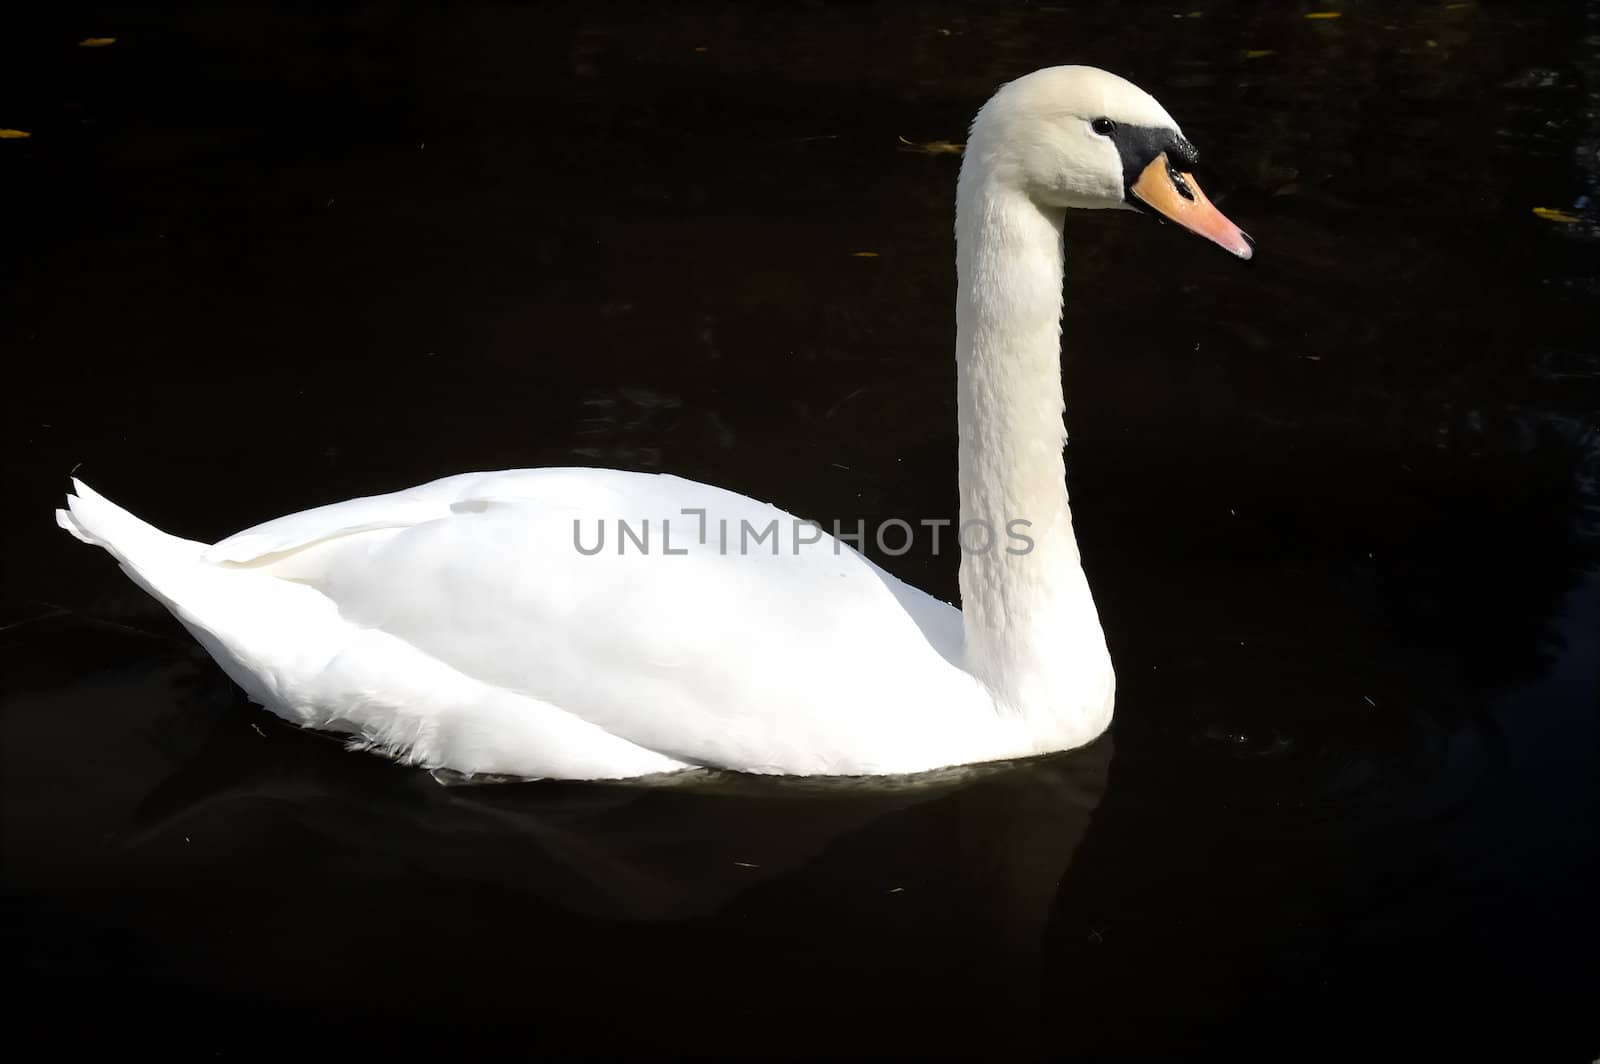 White swan swimming in a dark pond